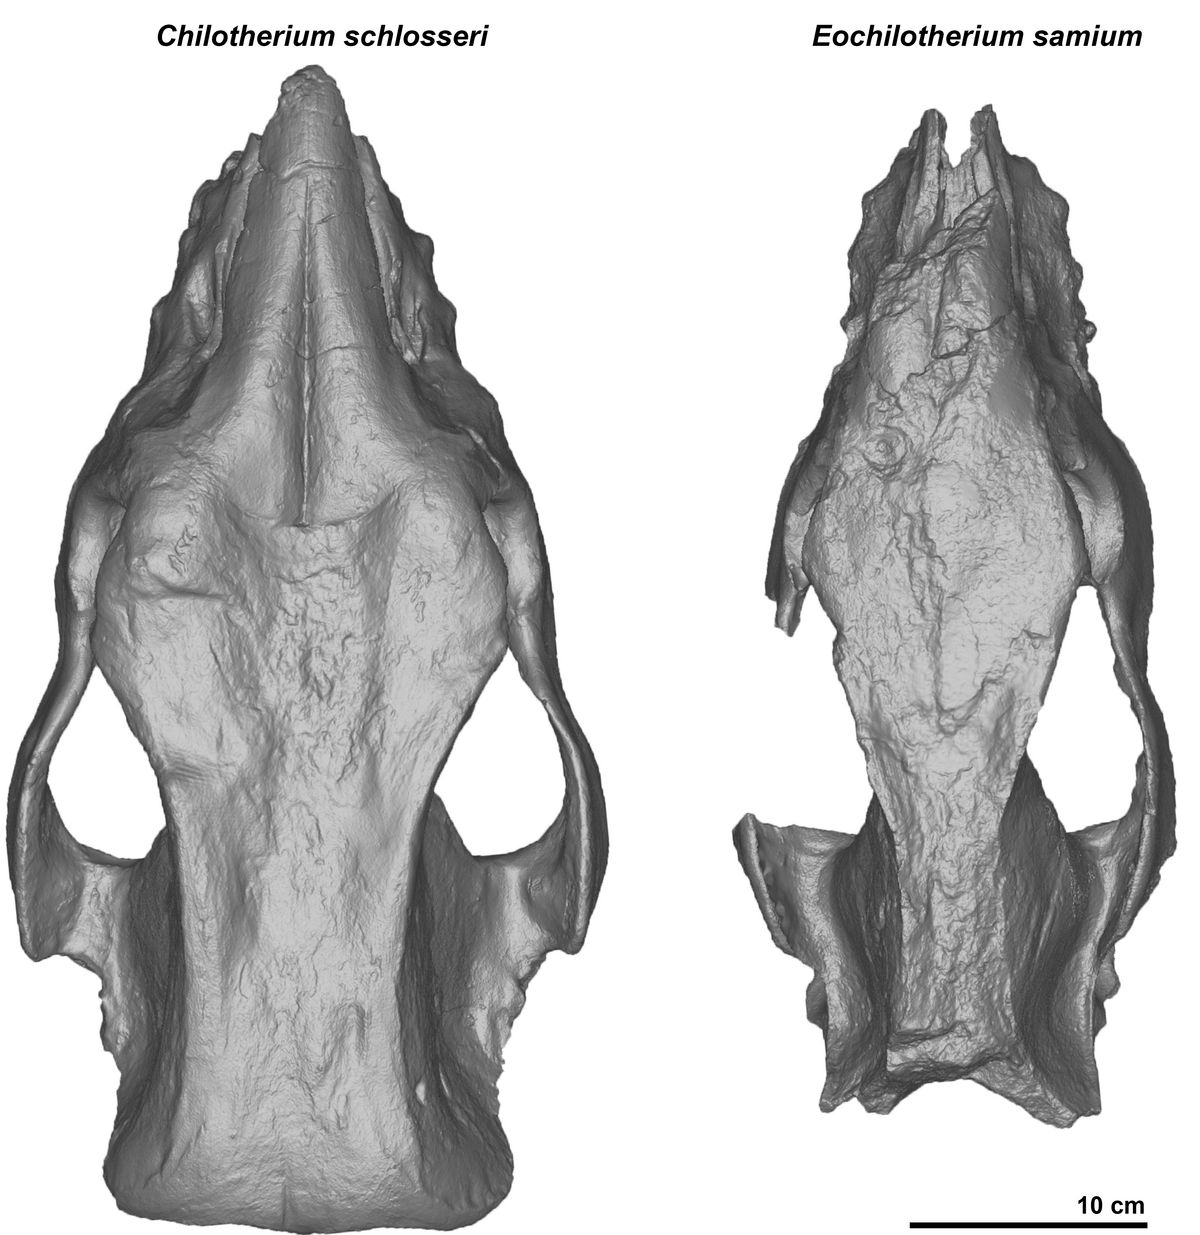 3D surface models of the examined skulls of hornless rhinoceros species.